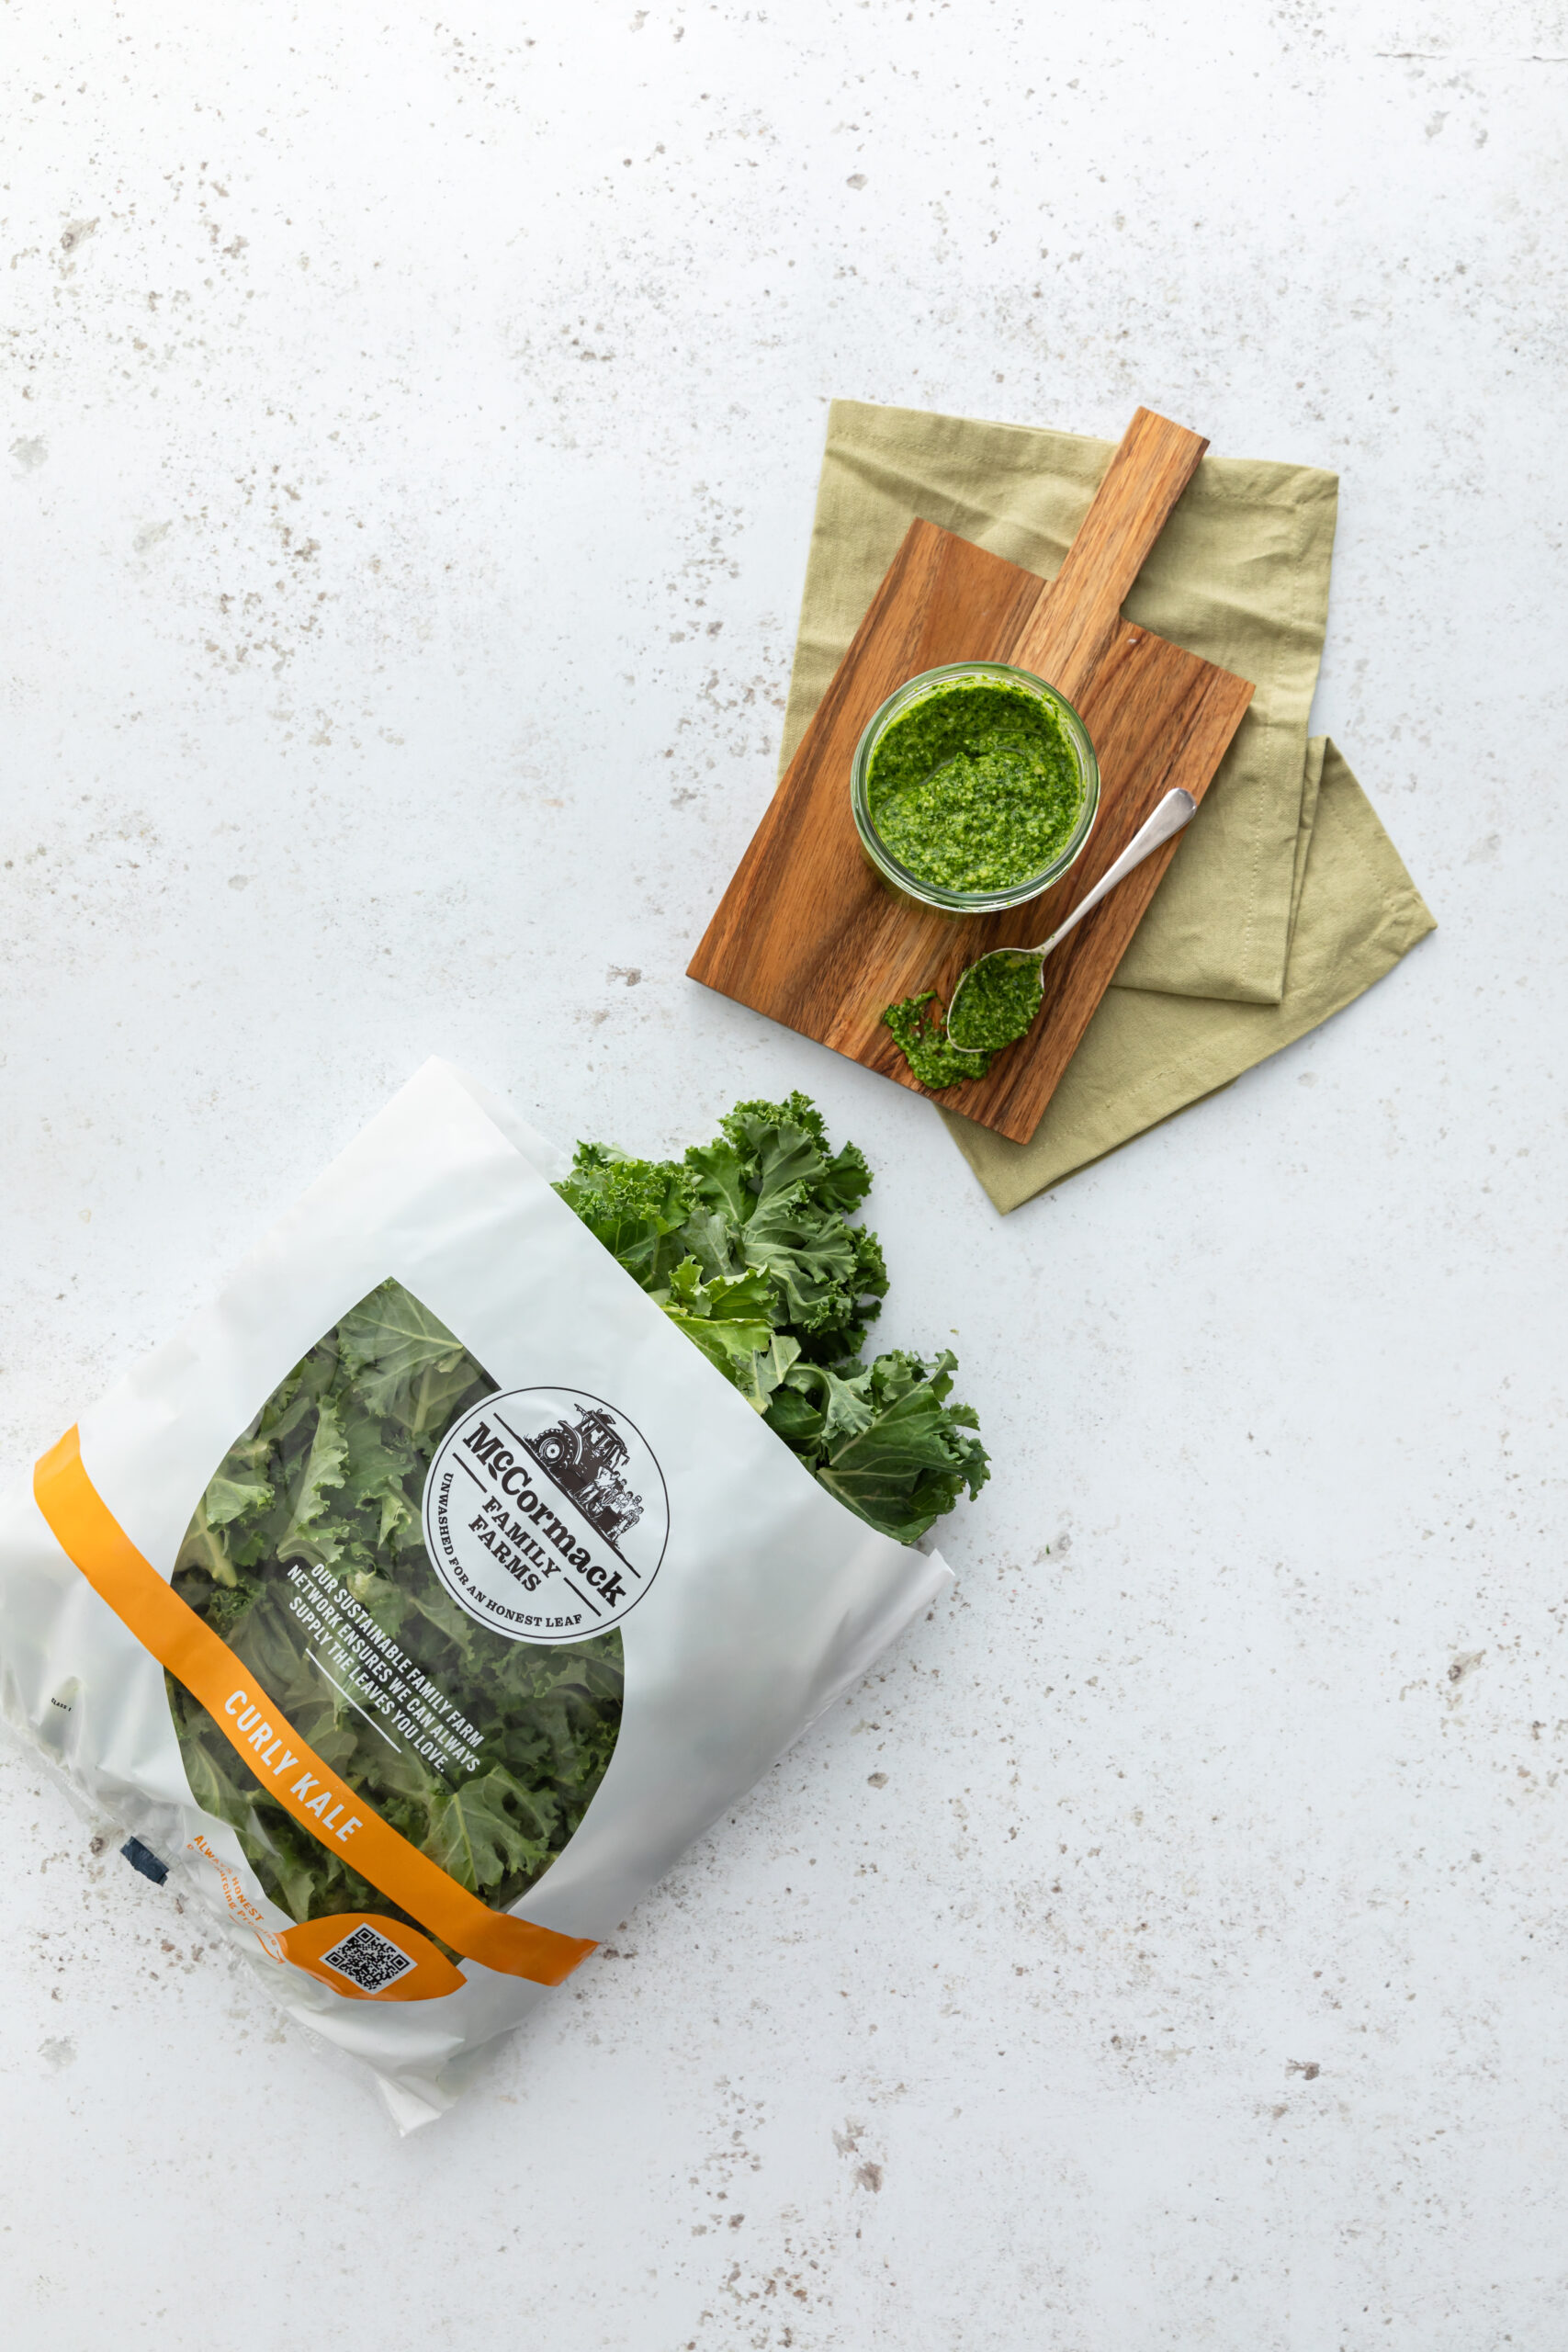 Kale pesto with a bag of kale